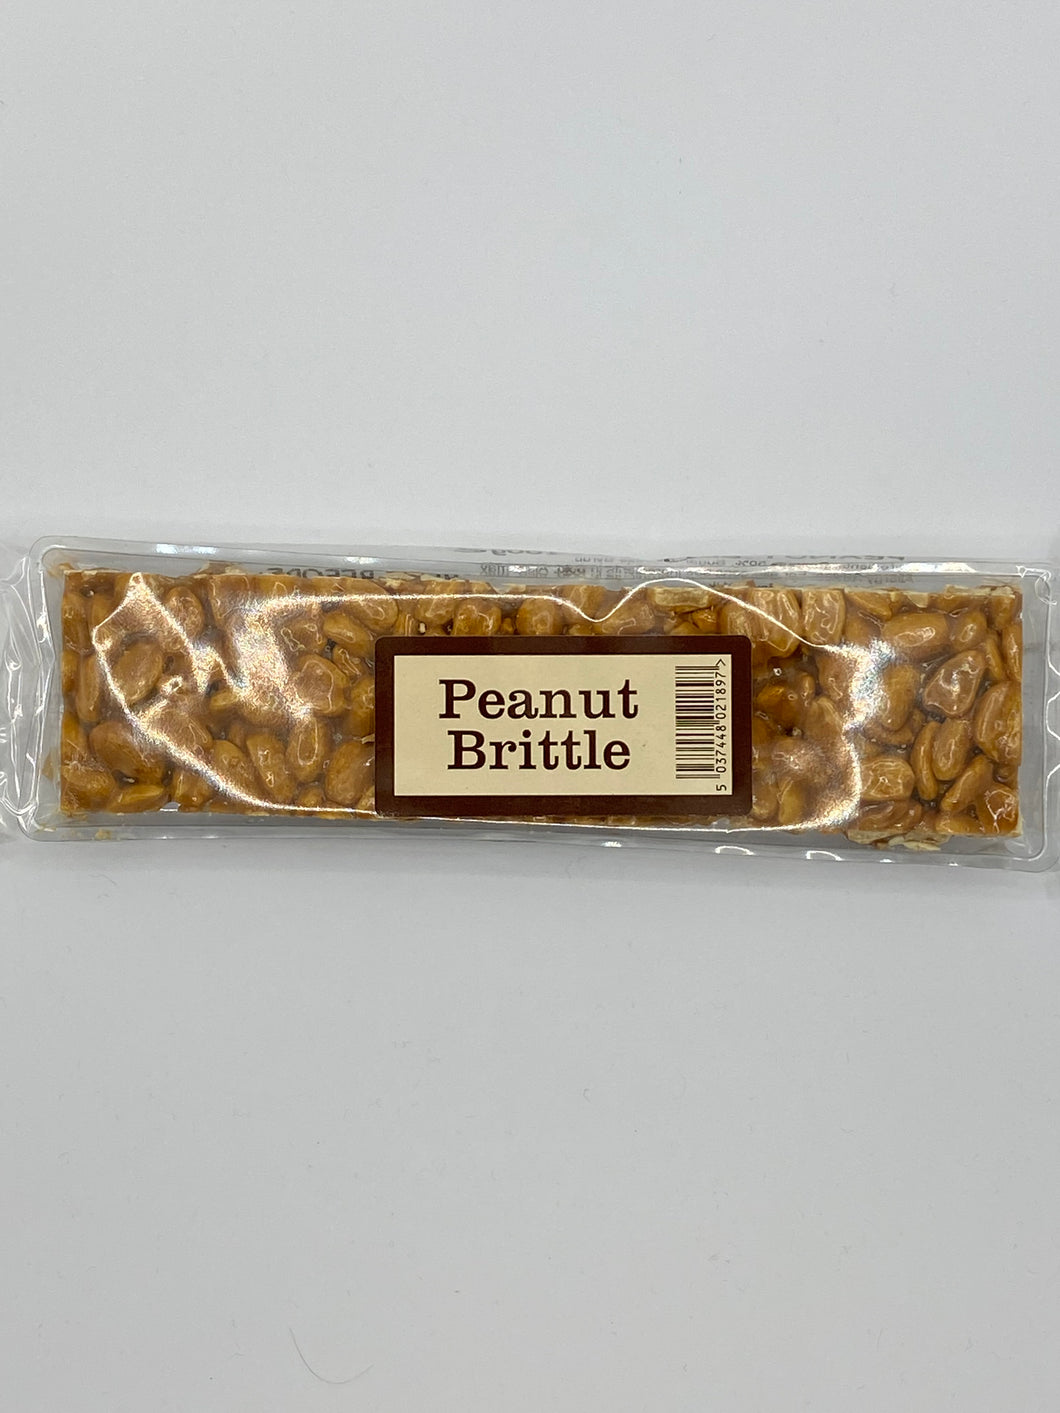 Bar of Peanut brittle